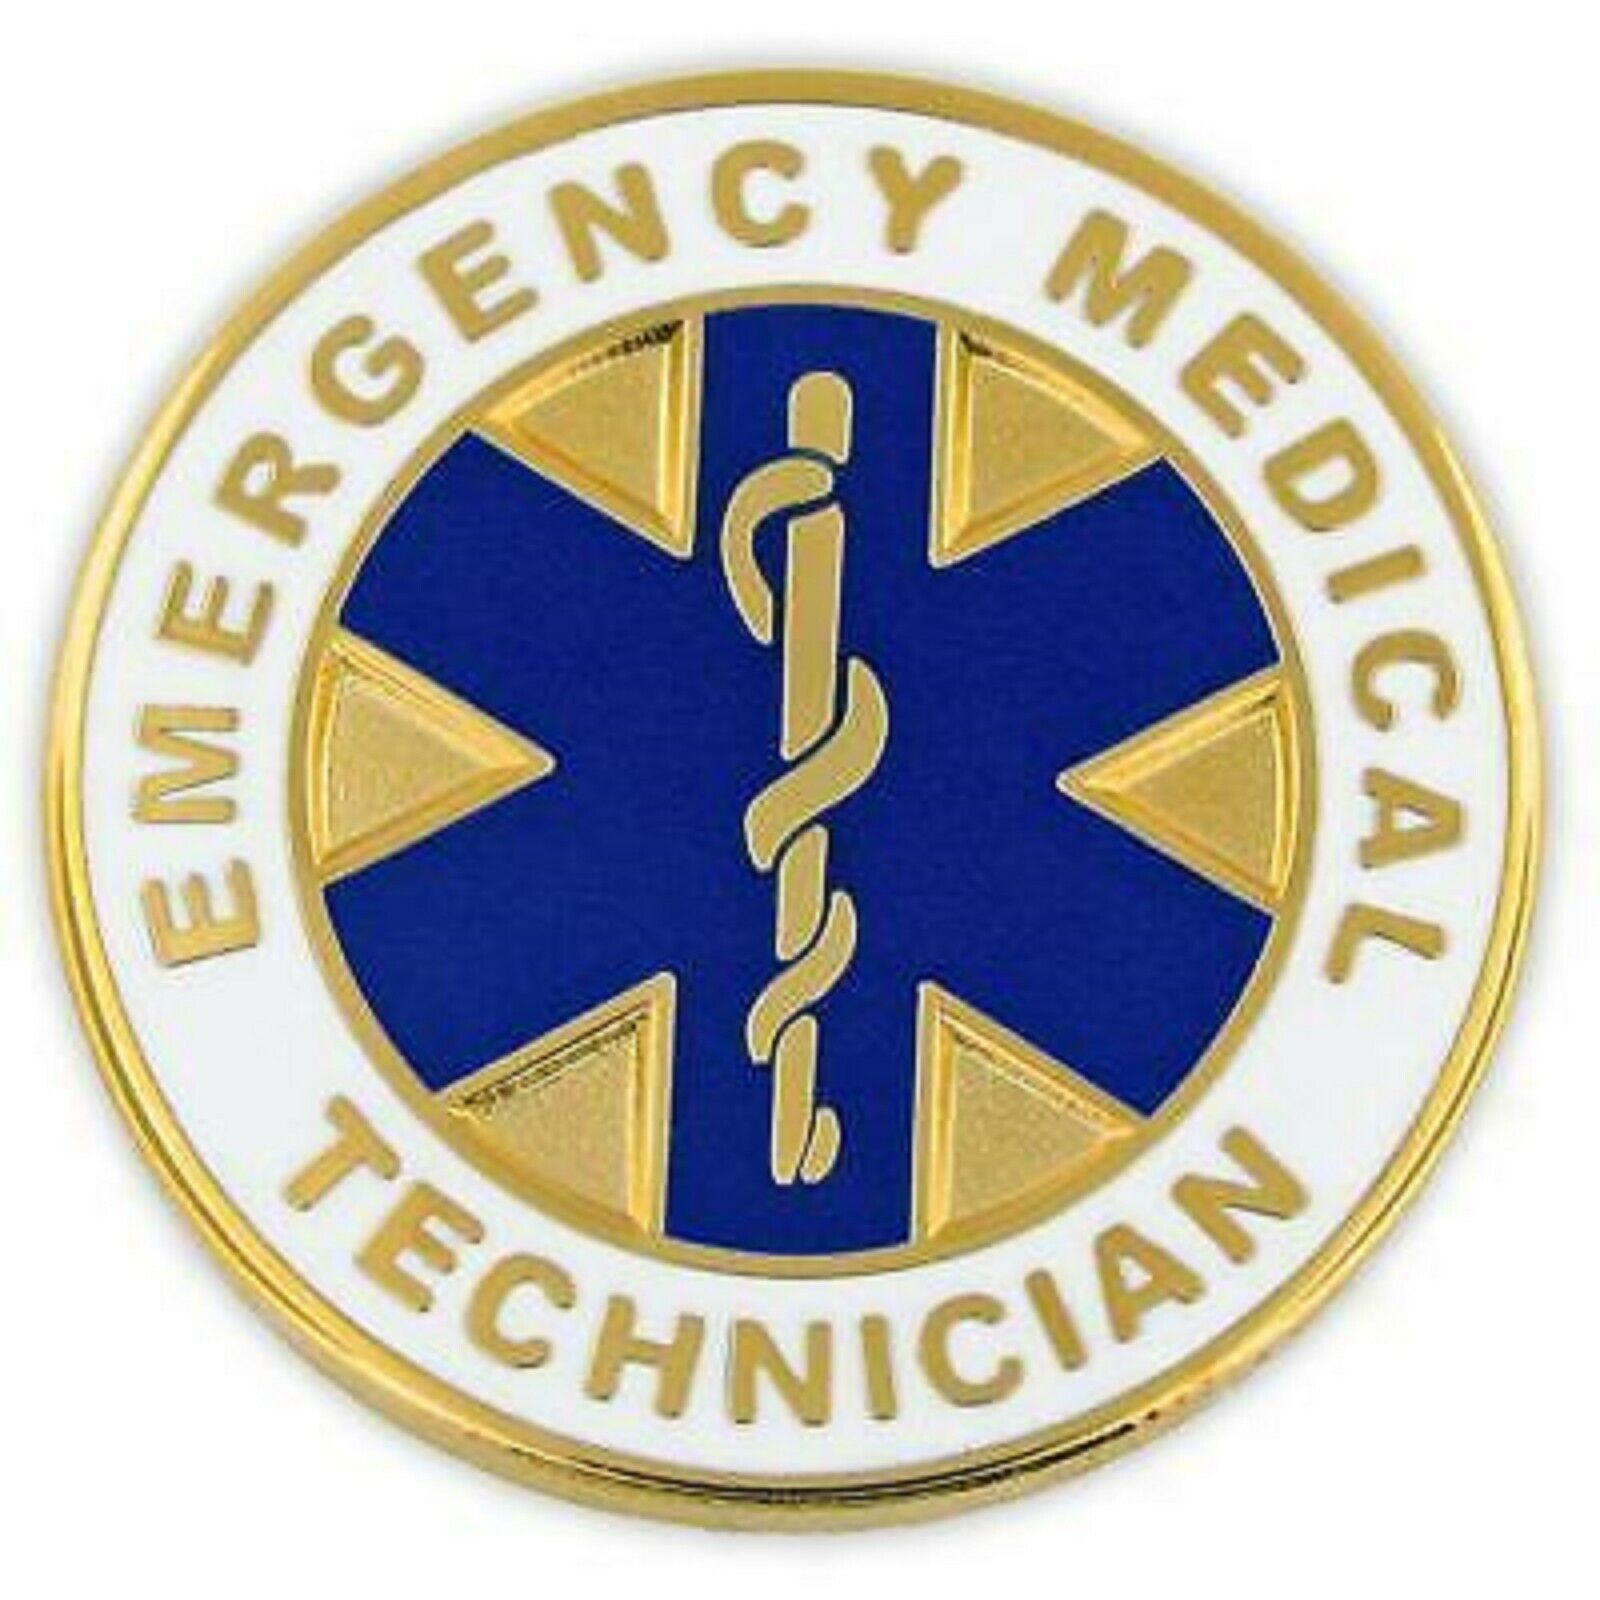 EMT FIRE EMERGENCY MEDICAL TECHNICIAN GOLD BLUE STAR OF LIFE  CADUCEUS BADGE PIN